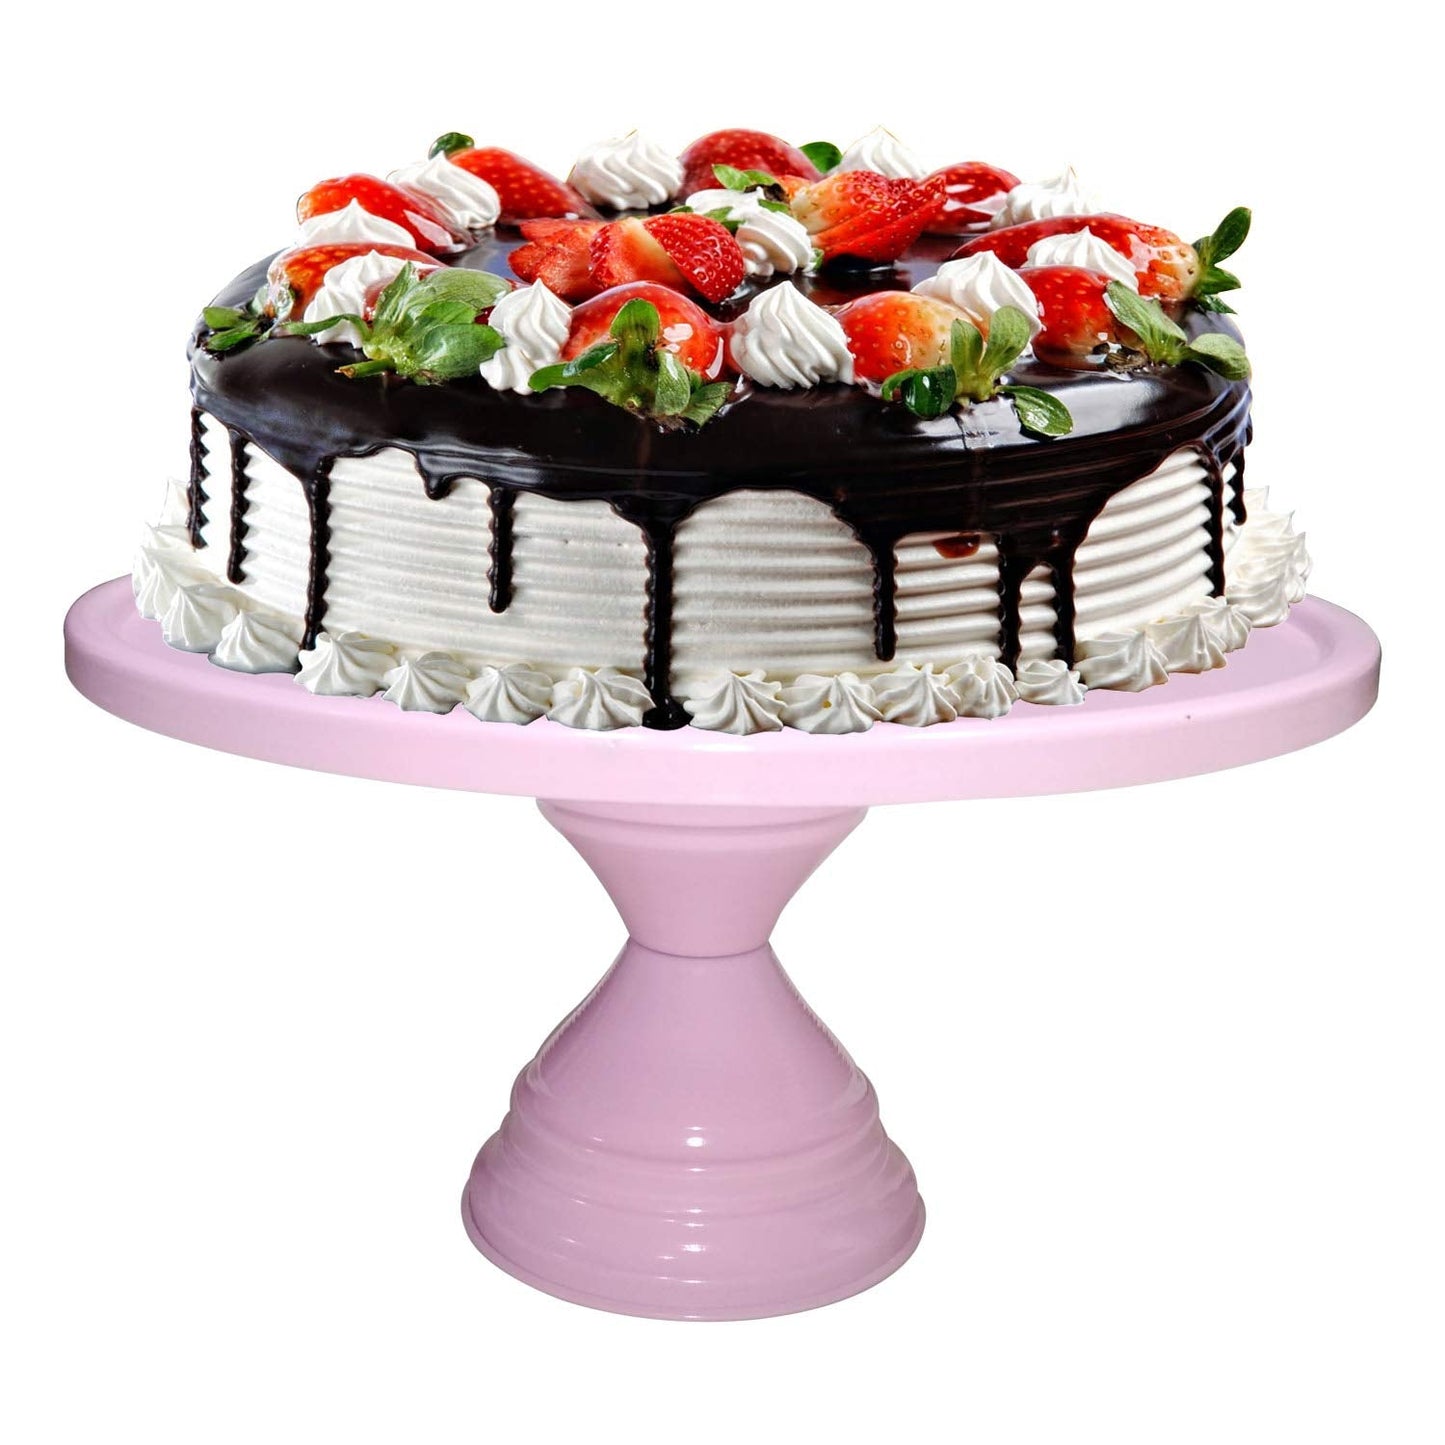 GiftBay Creations Cake Stand Pedestal 11" Diameter (Top), Strong Metal (Pink)